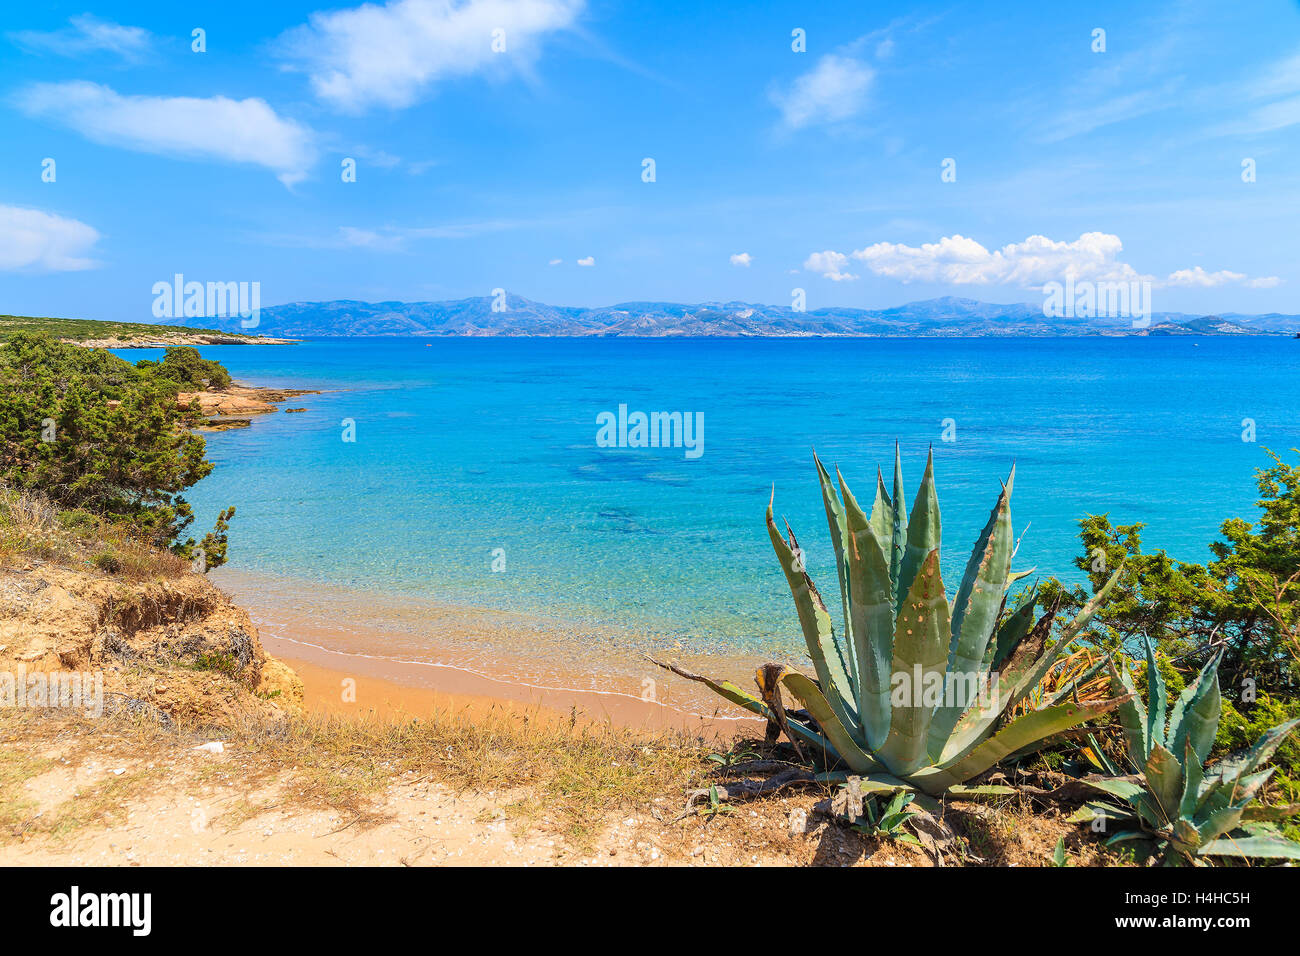 A view of beautiful beach near Santa Maria village, Paros island, Greece Stock Photo